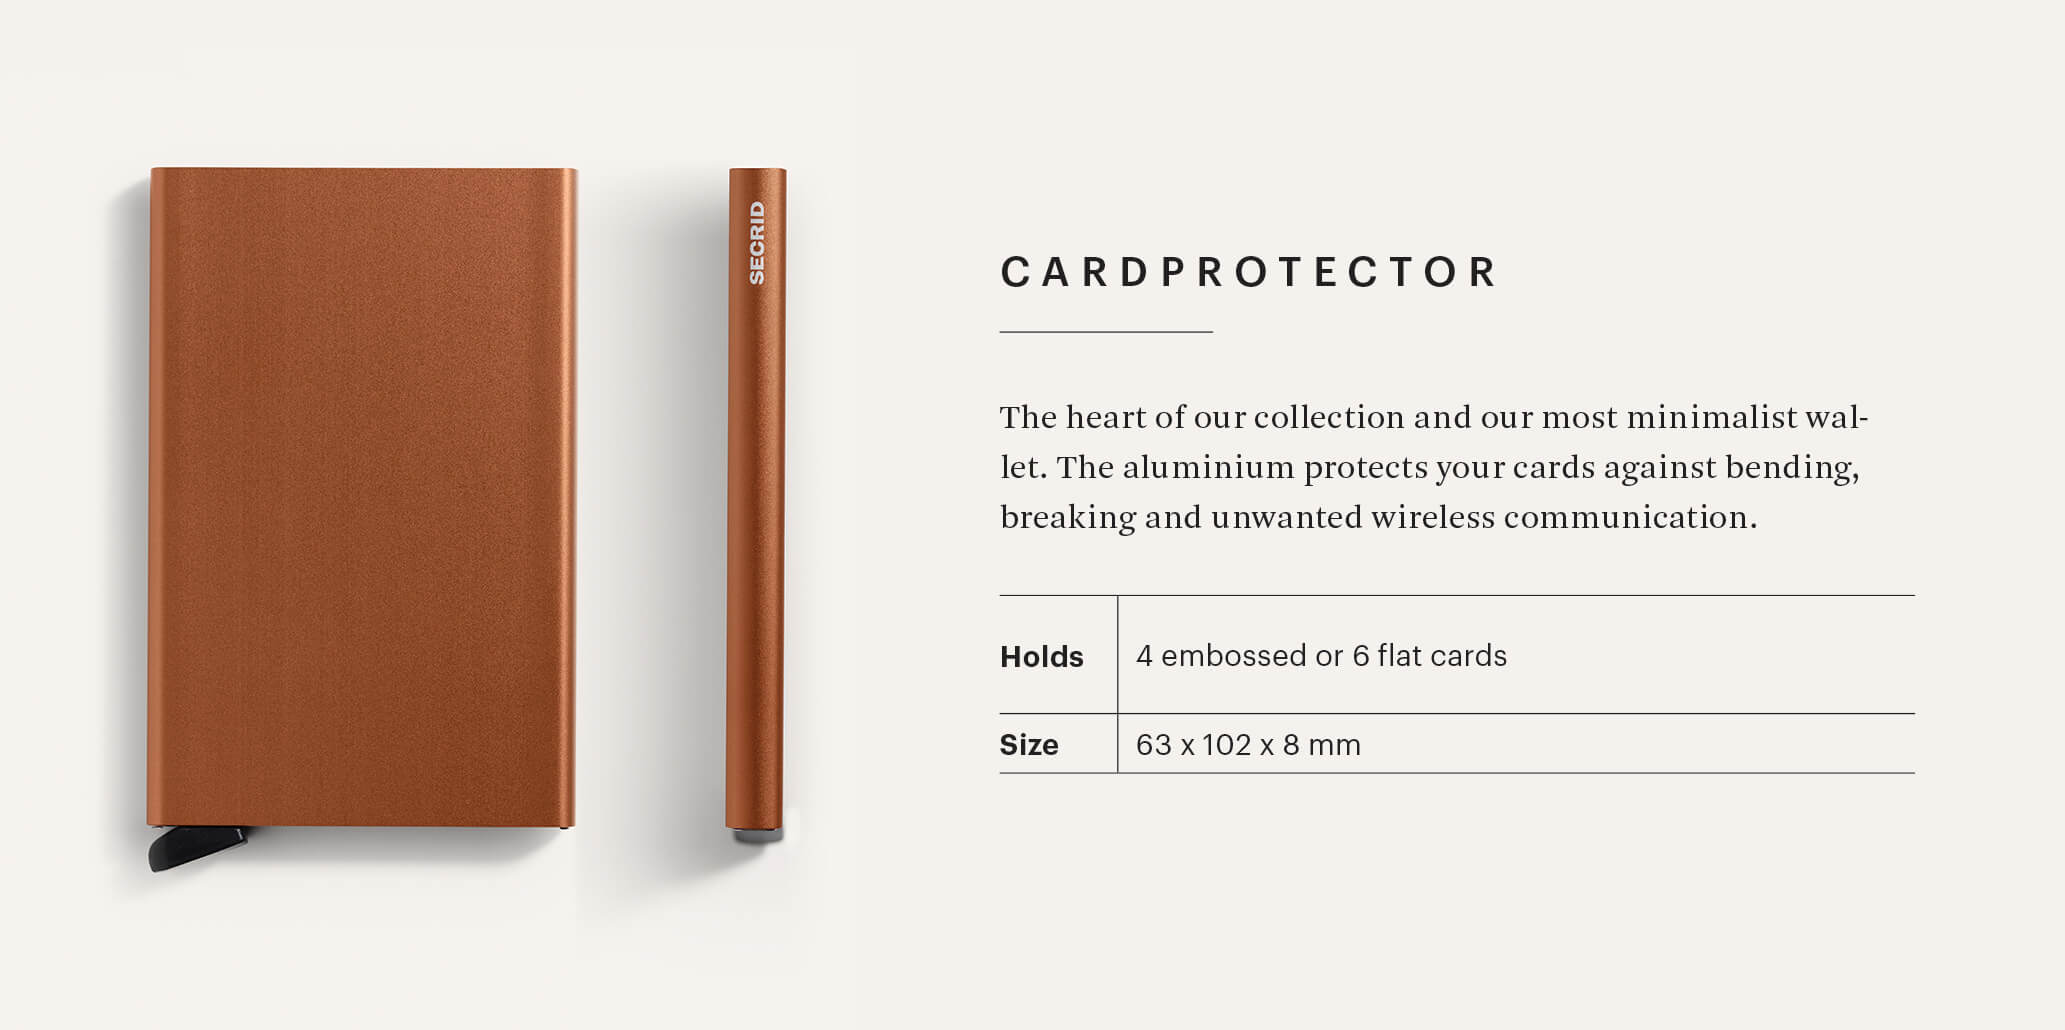 Cardprotector | Powder Coated Ochre | by Secrid Wallets - Lifestory